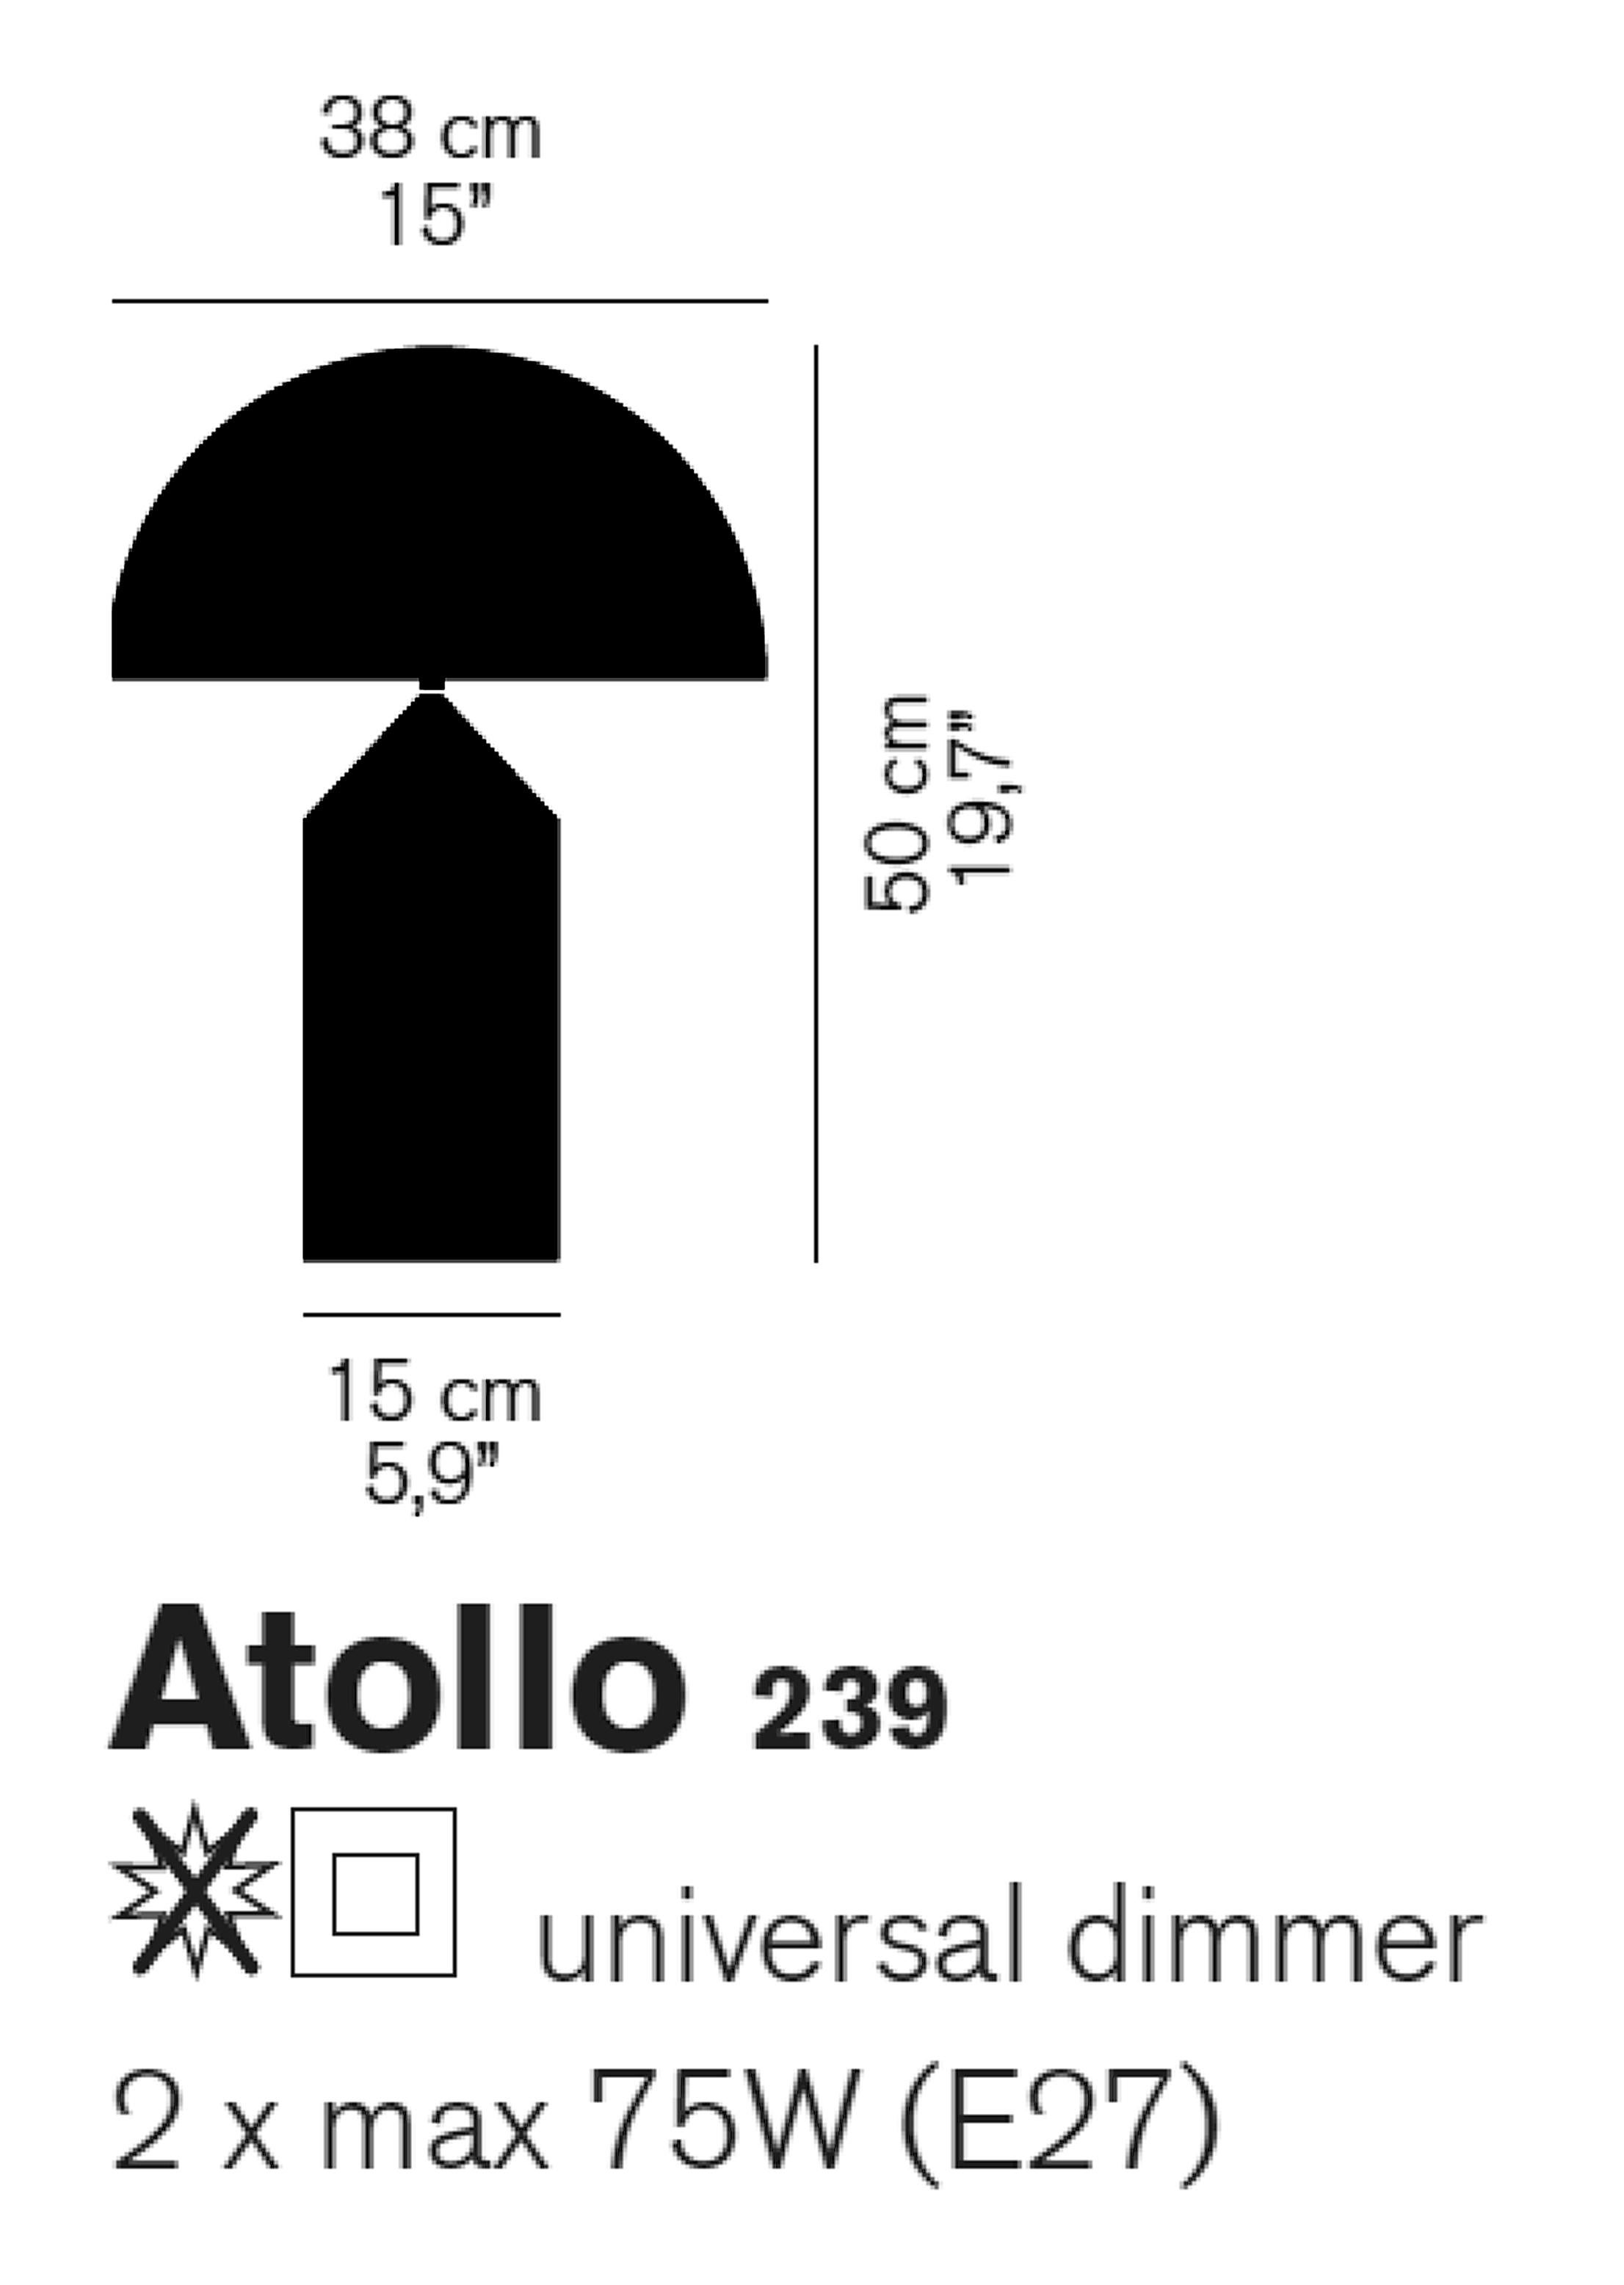 Aluminum Metal Black/White Table Lamp Atollo 233 by Vico Magistretti for Oluce For Sale